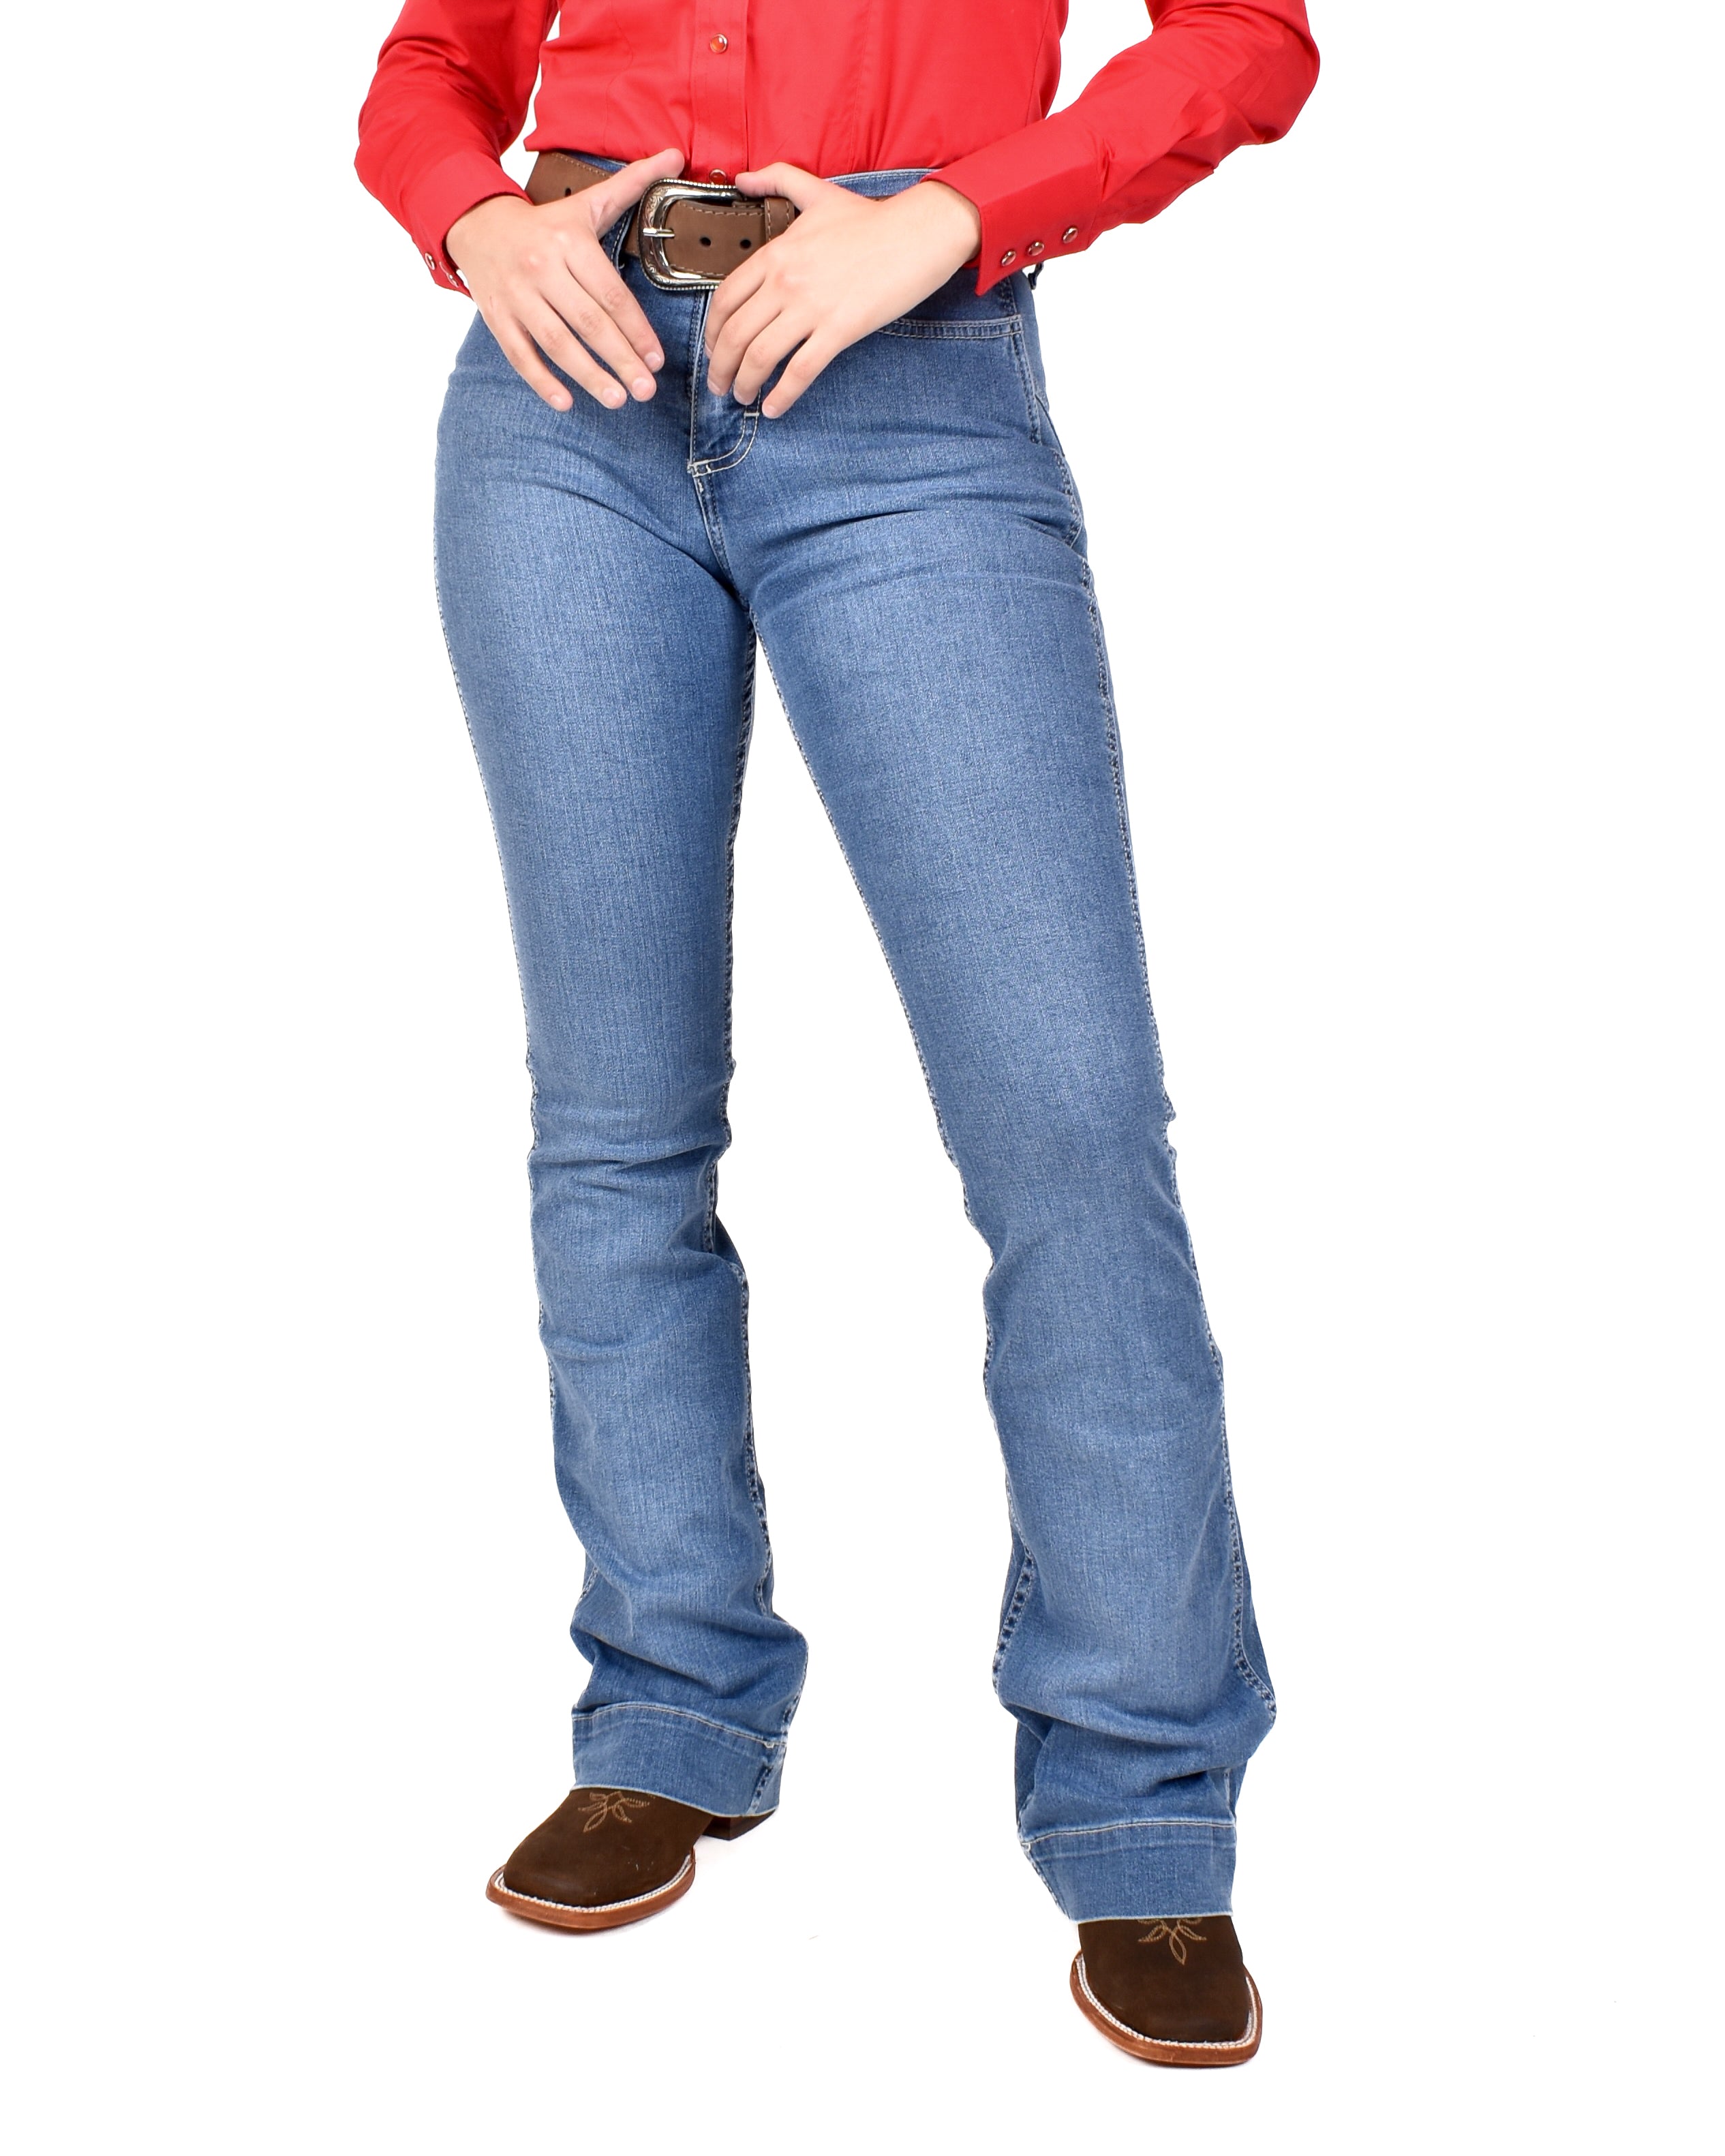 Jeans Wrangler Cintura Alta Corte Bota Dama